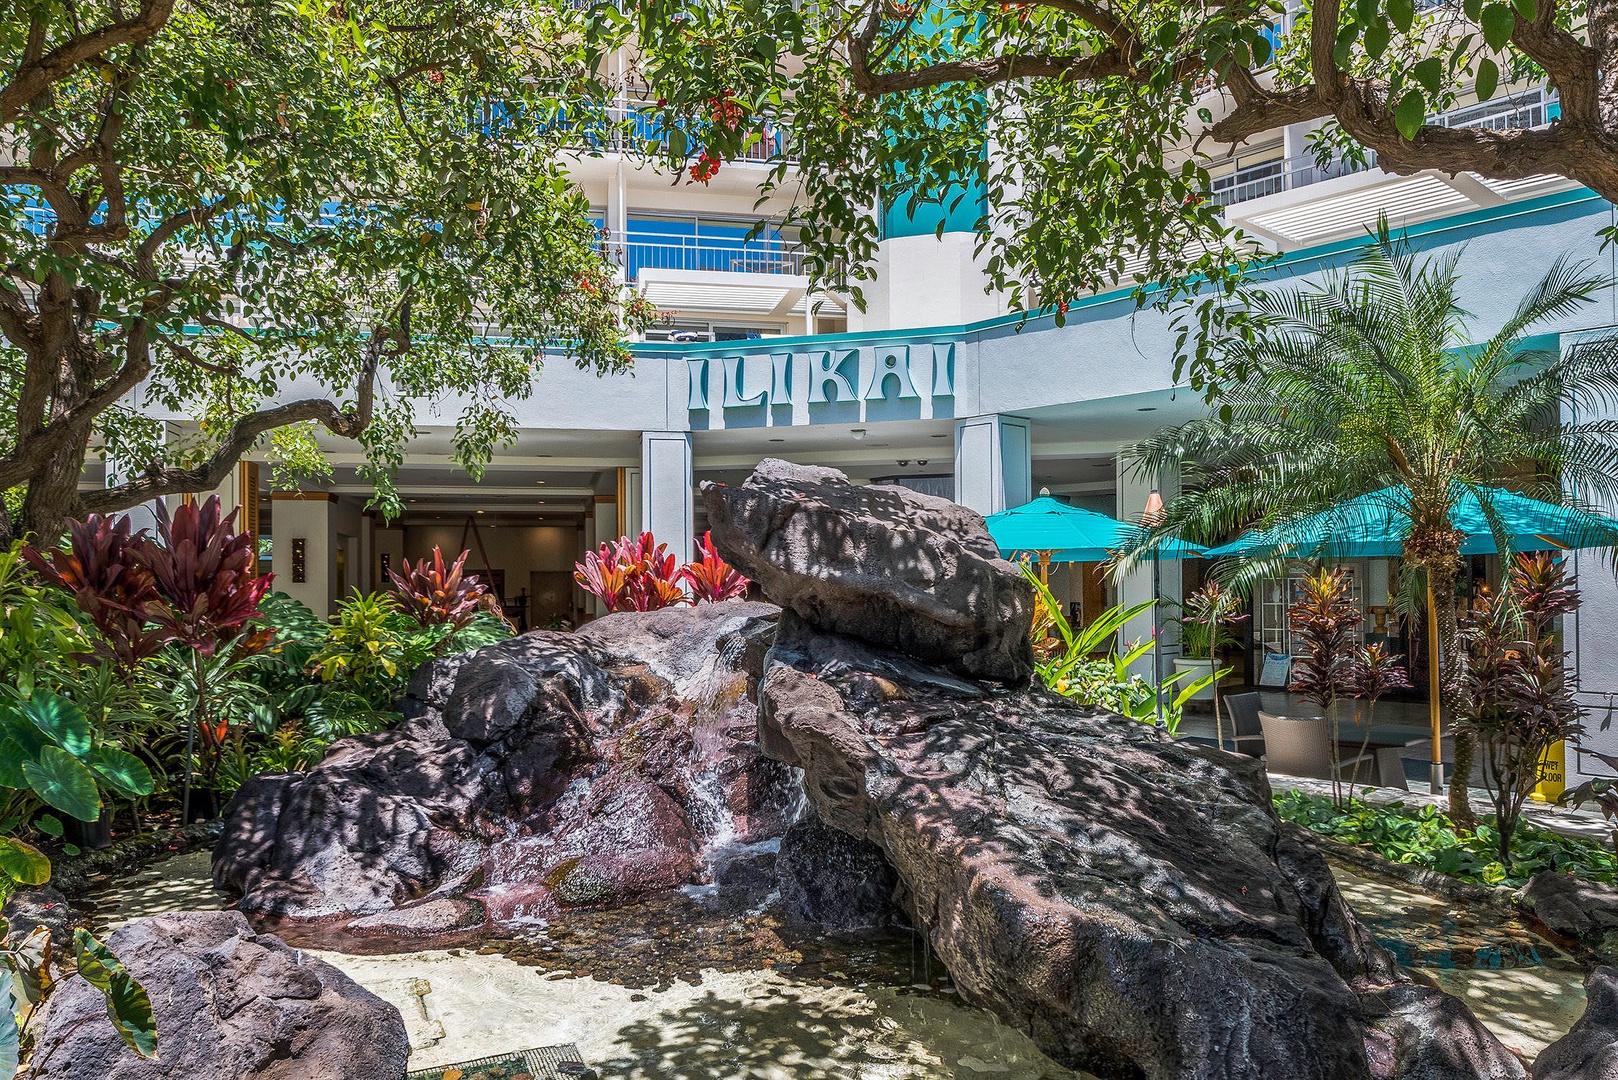 The Ilikai Hotel, close to Ala Moana shopping center, Waikiki Shell and strip, Honolulu Zoo, Diamond Head, beach